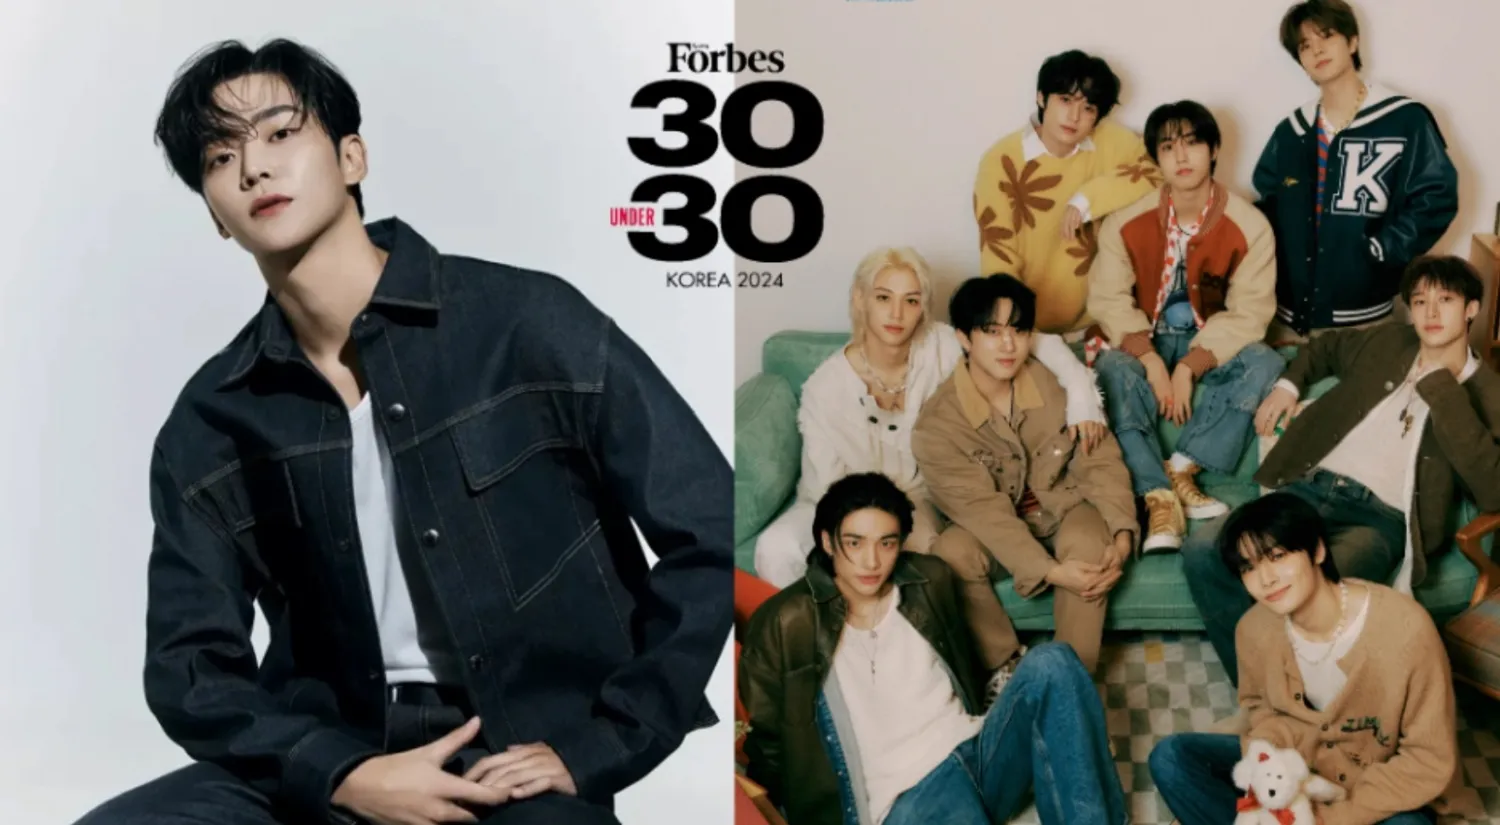 Rowoon 和 Stray Kids 成為福布斯韓國 2024 年「30 位 30 歲以下」榜單中唯一的韓國流行偶像團體